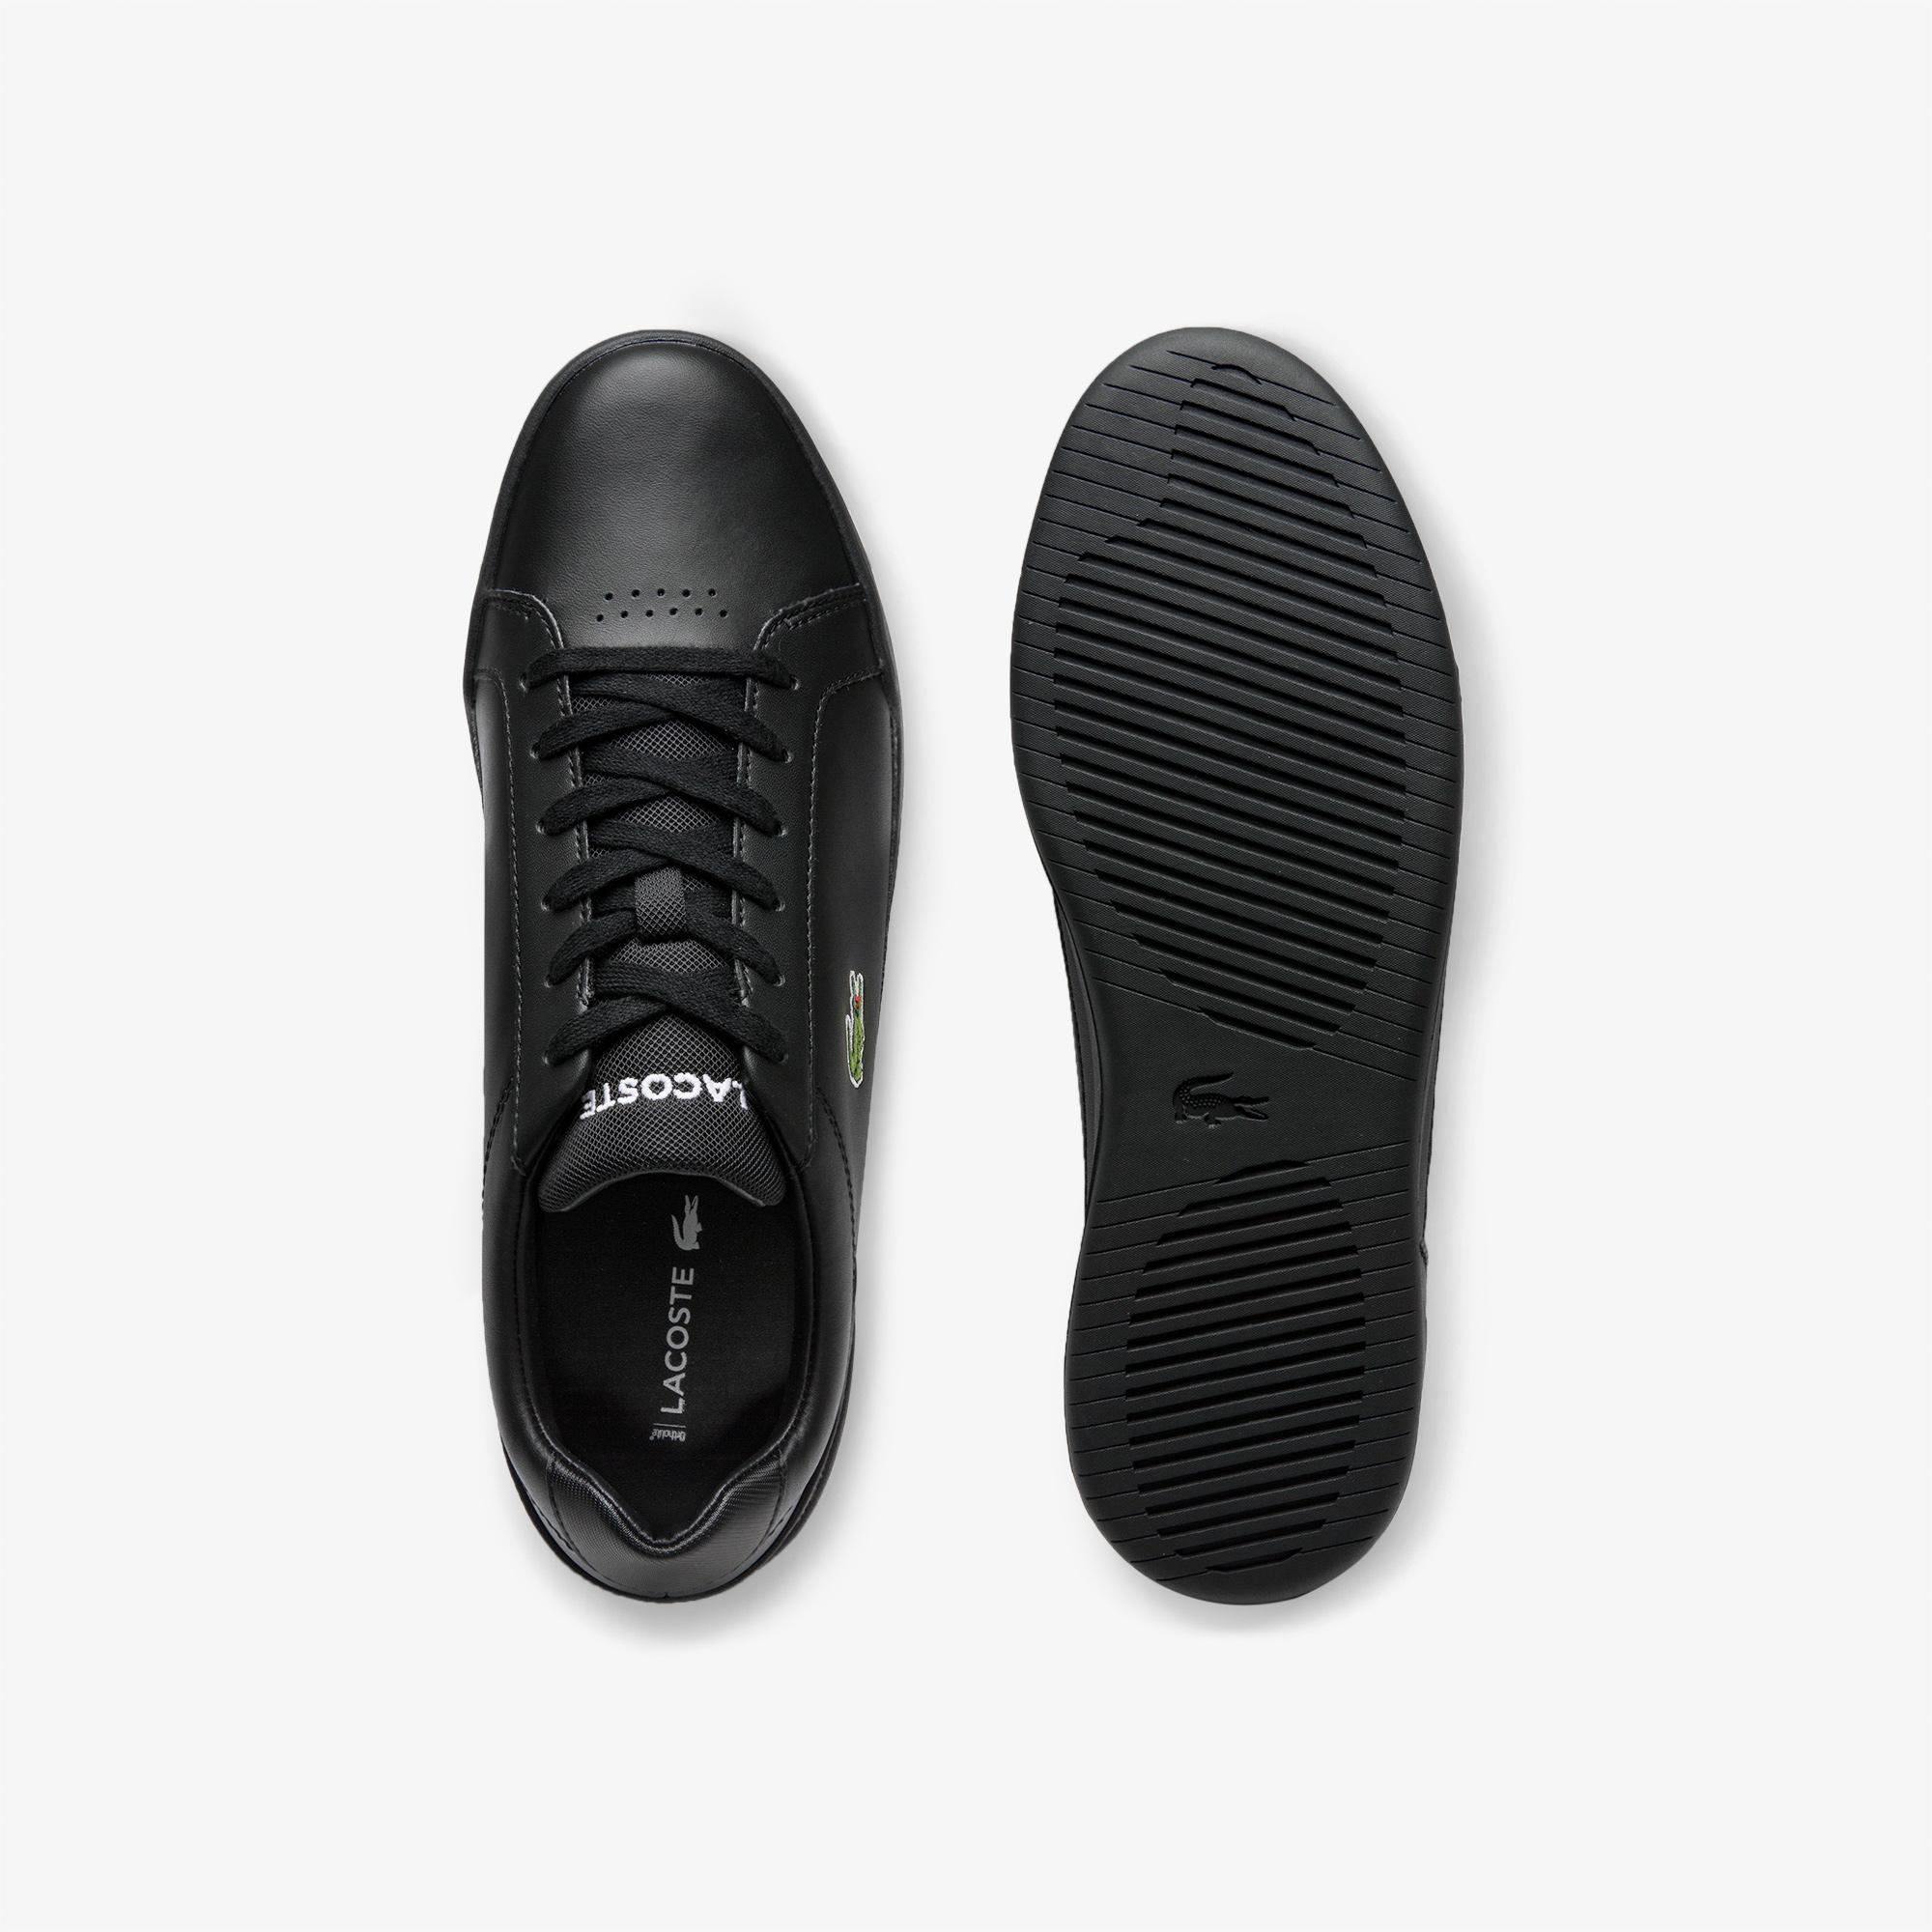 Lacoste Men's Challenge Textured Leather Sneakers